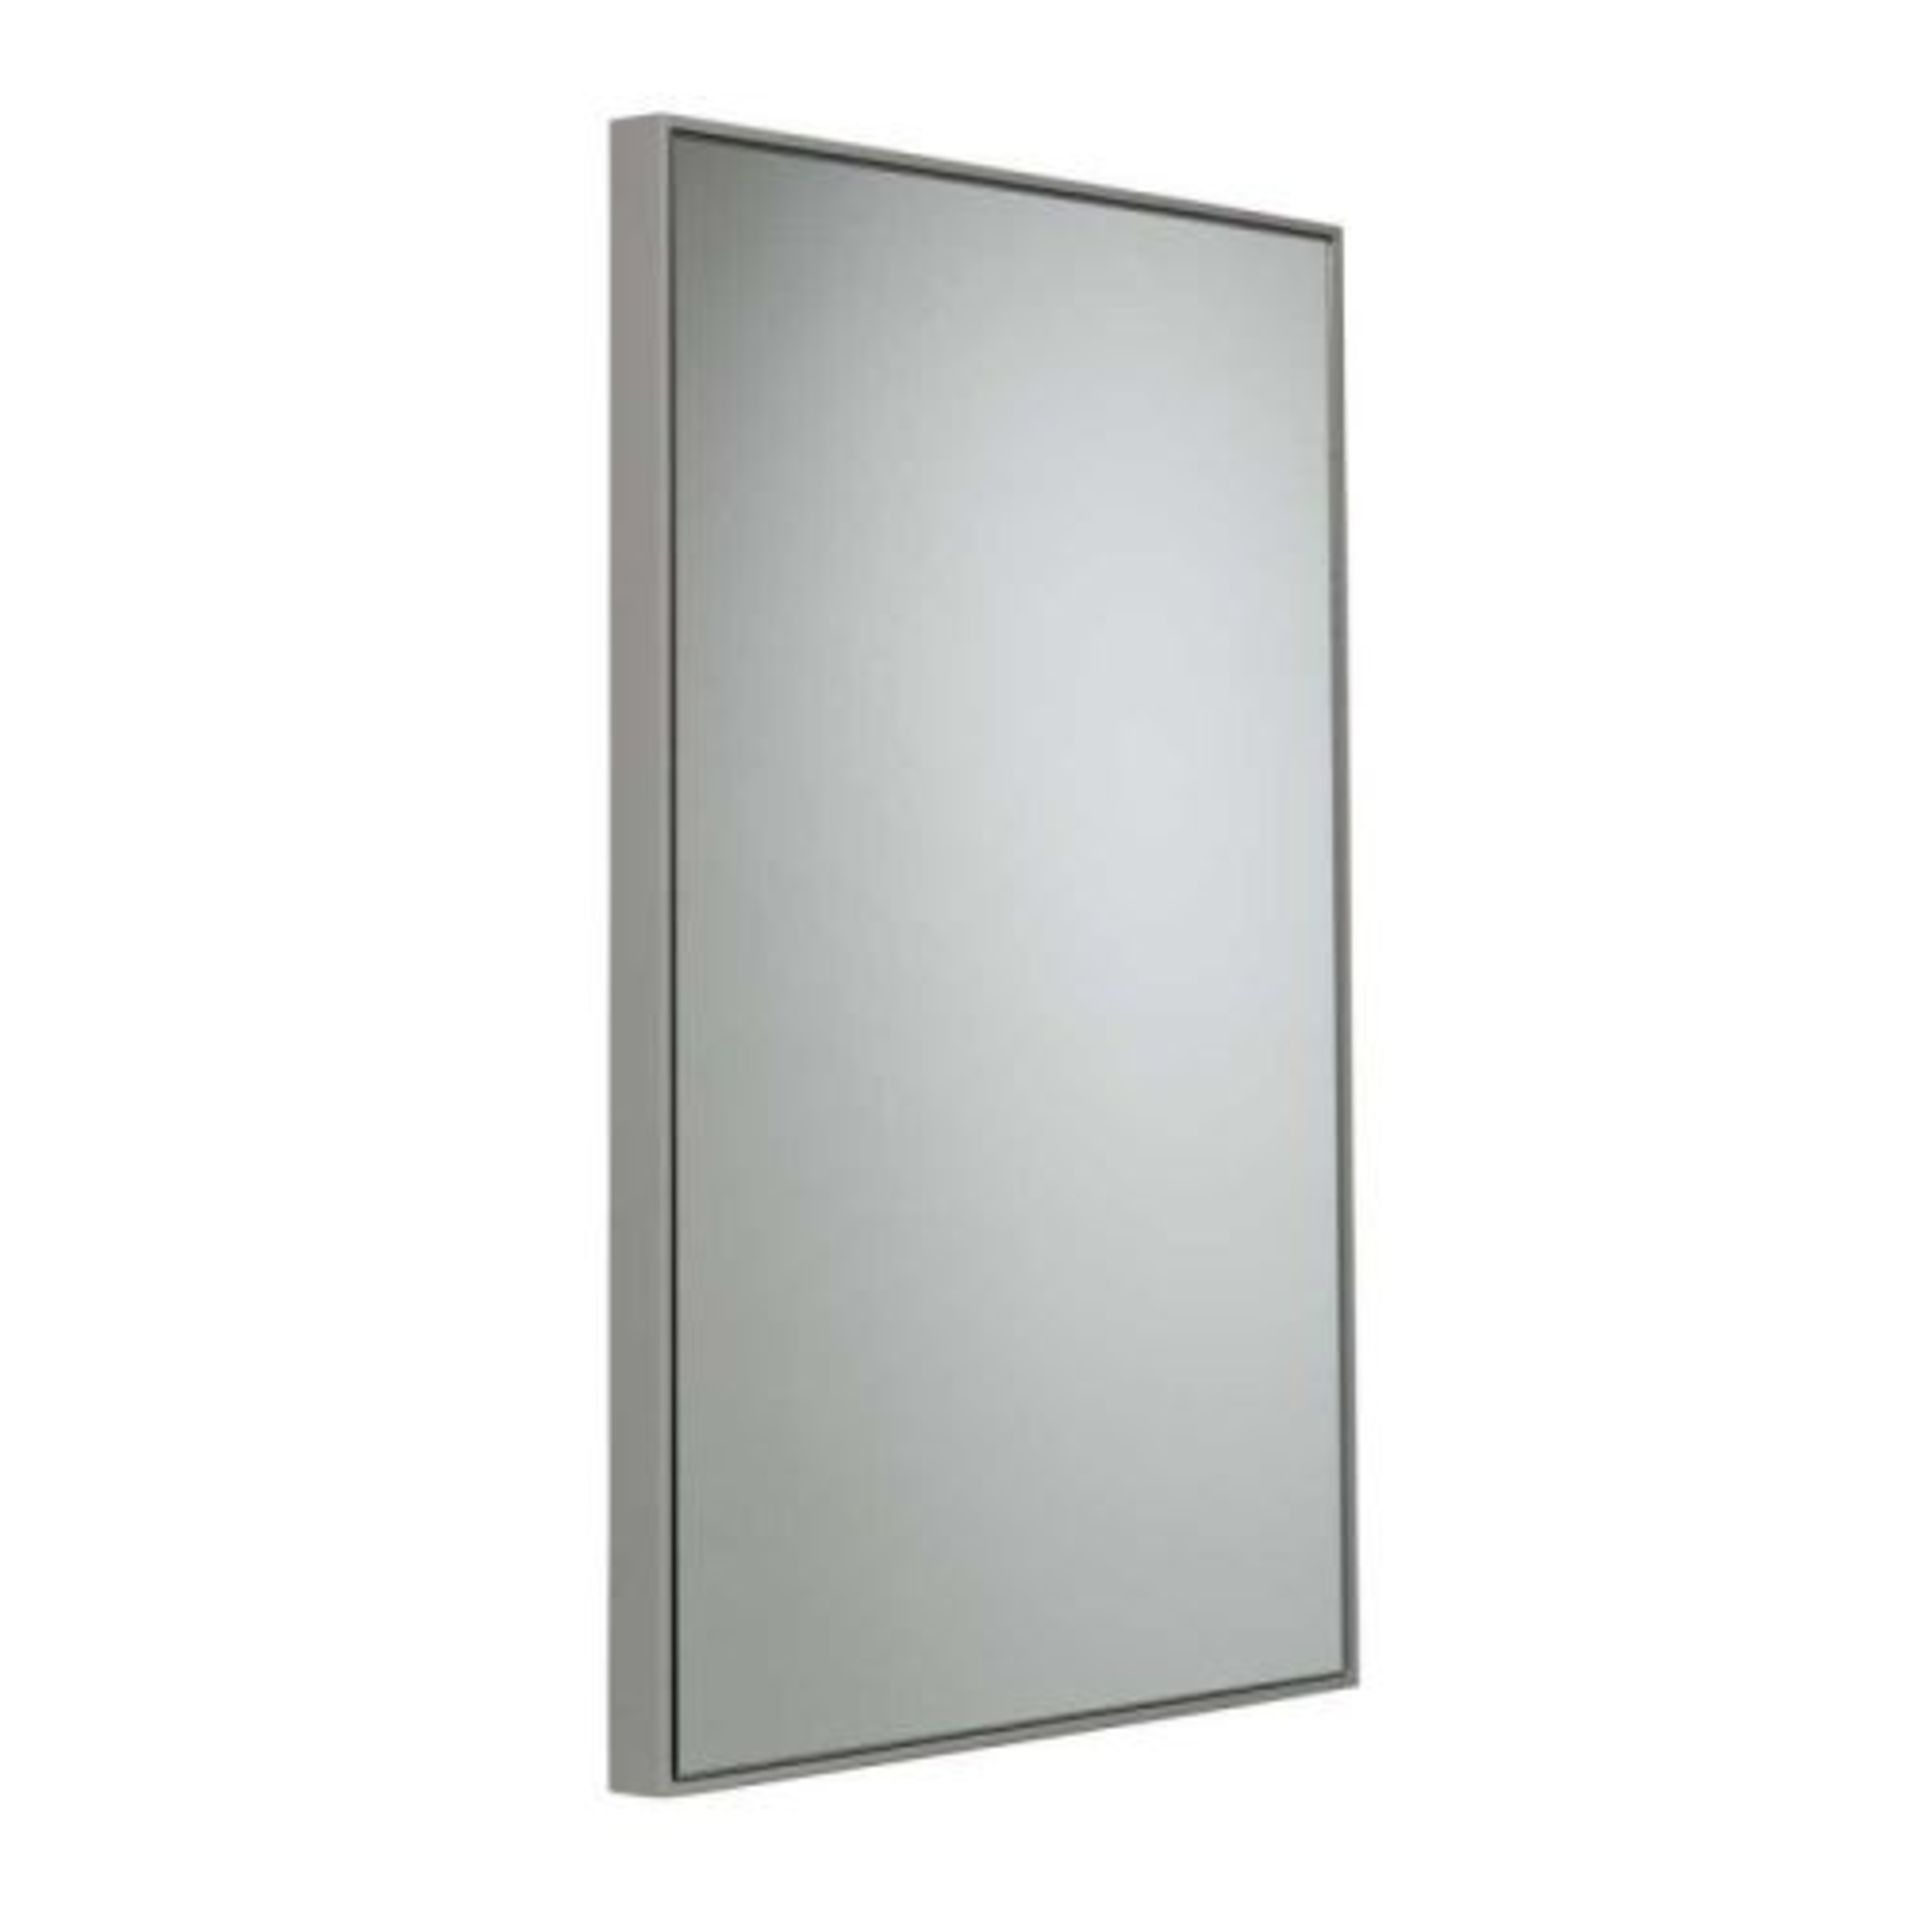 R2 Bathrooms Modular AM5050.LG Framed Mirror - Light Grey - Image 2 of 9